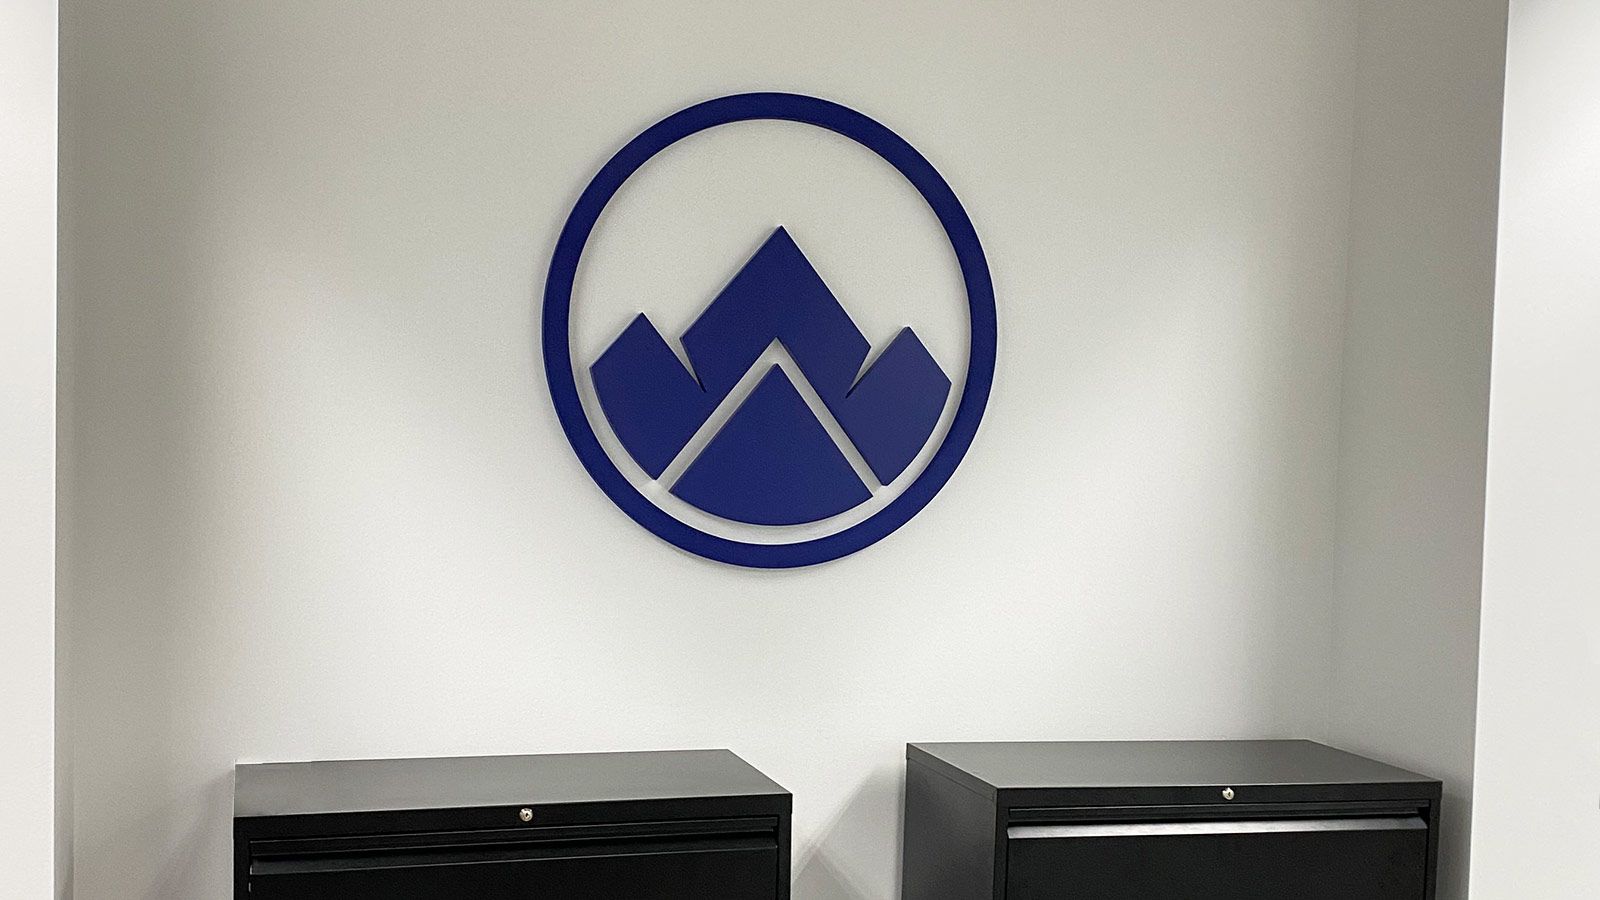 Four Peaks capital office sign